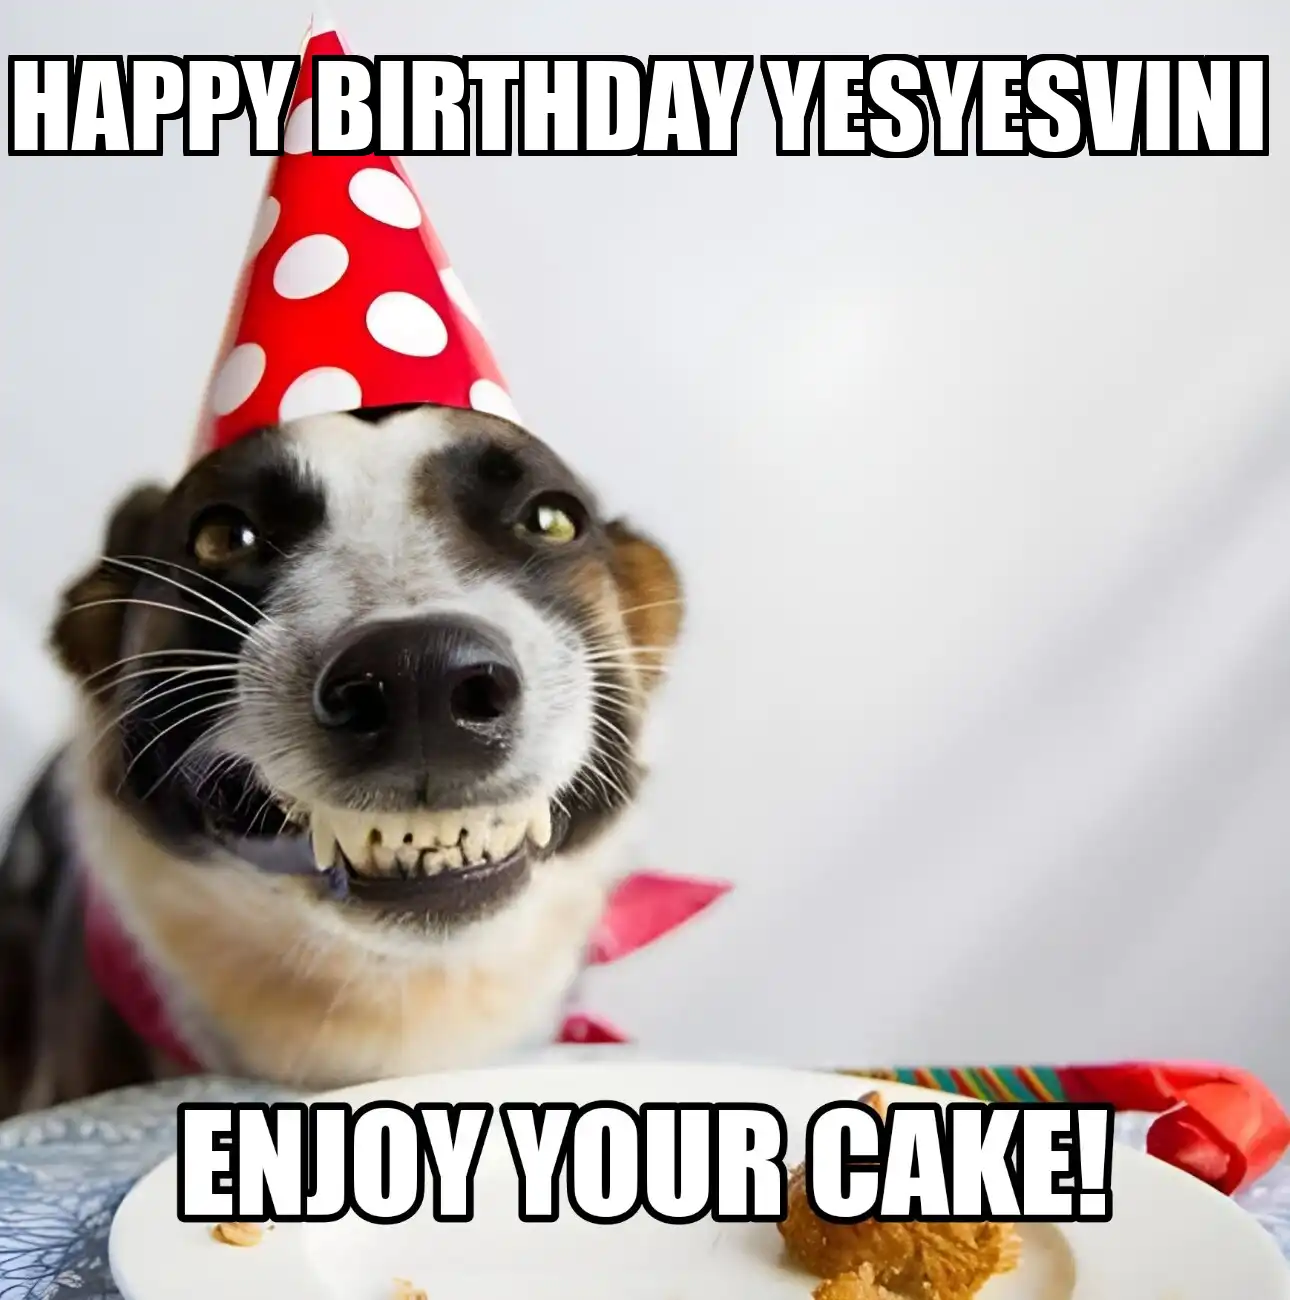 Happy Birthday Yesyesvini Enjoy Your Cake Dog Meme